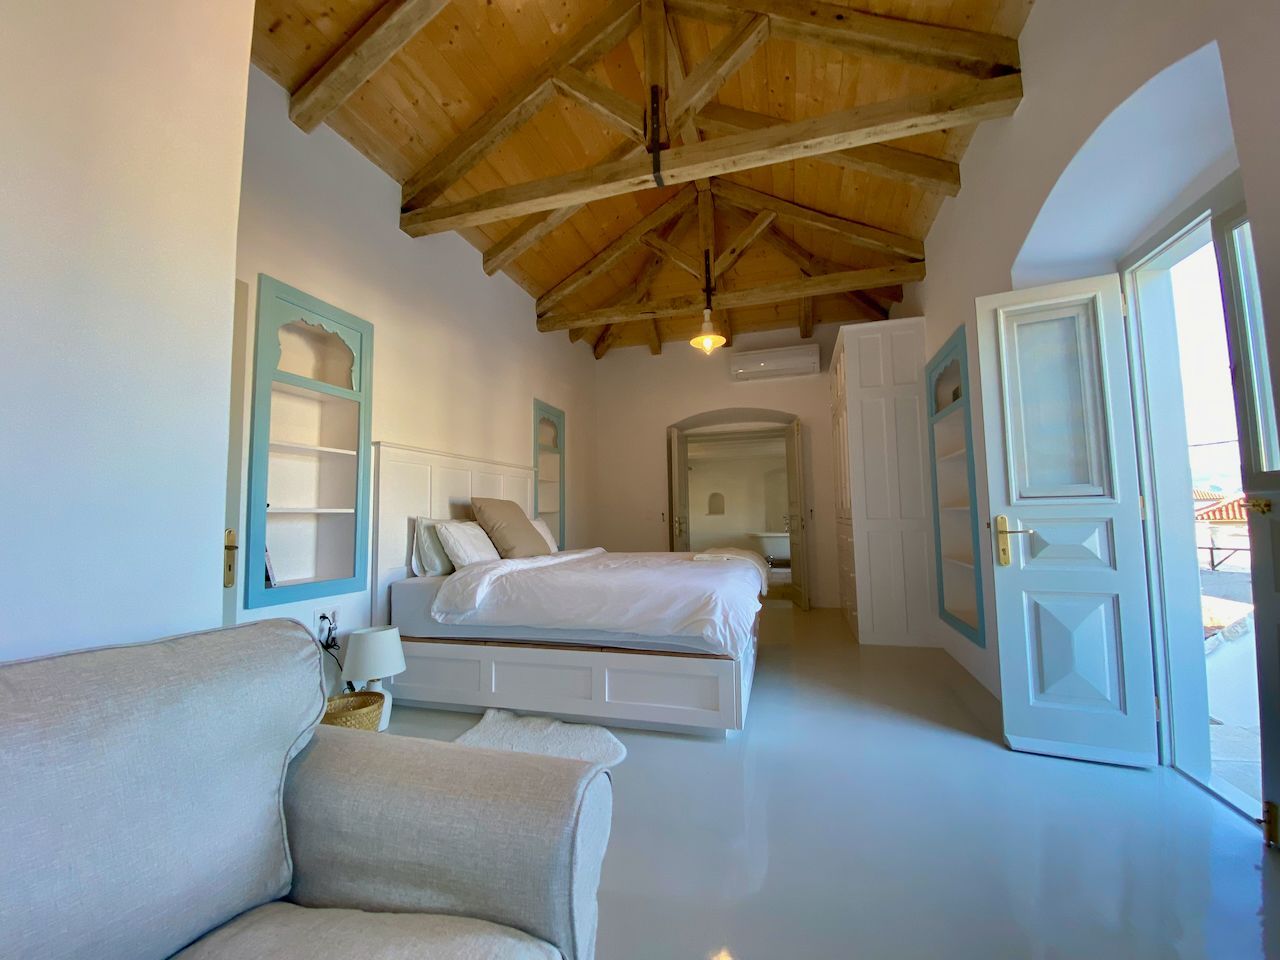 Hydra Homesteads, luxury holiday accommodation on Hydra Island Greece.